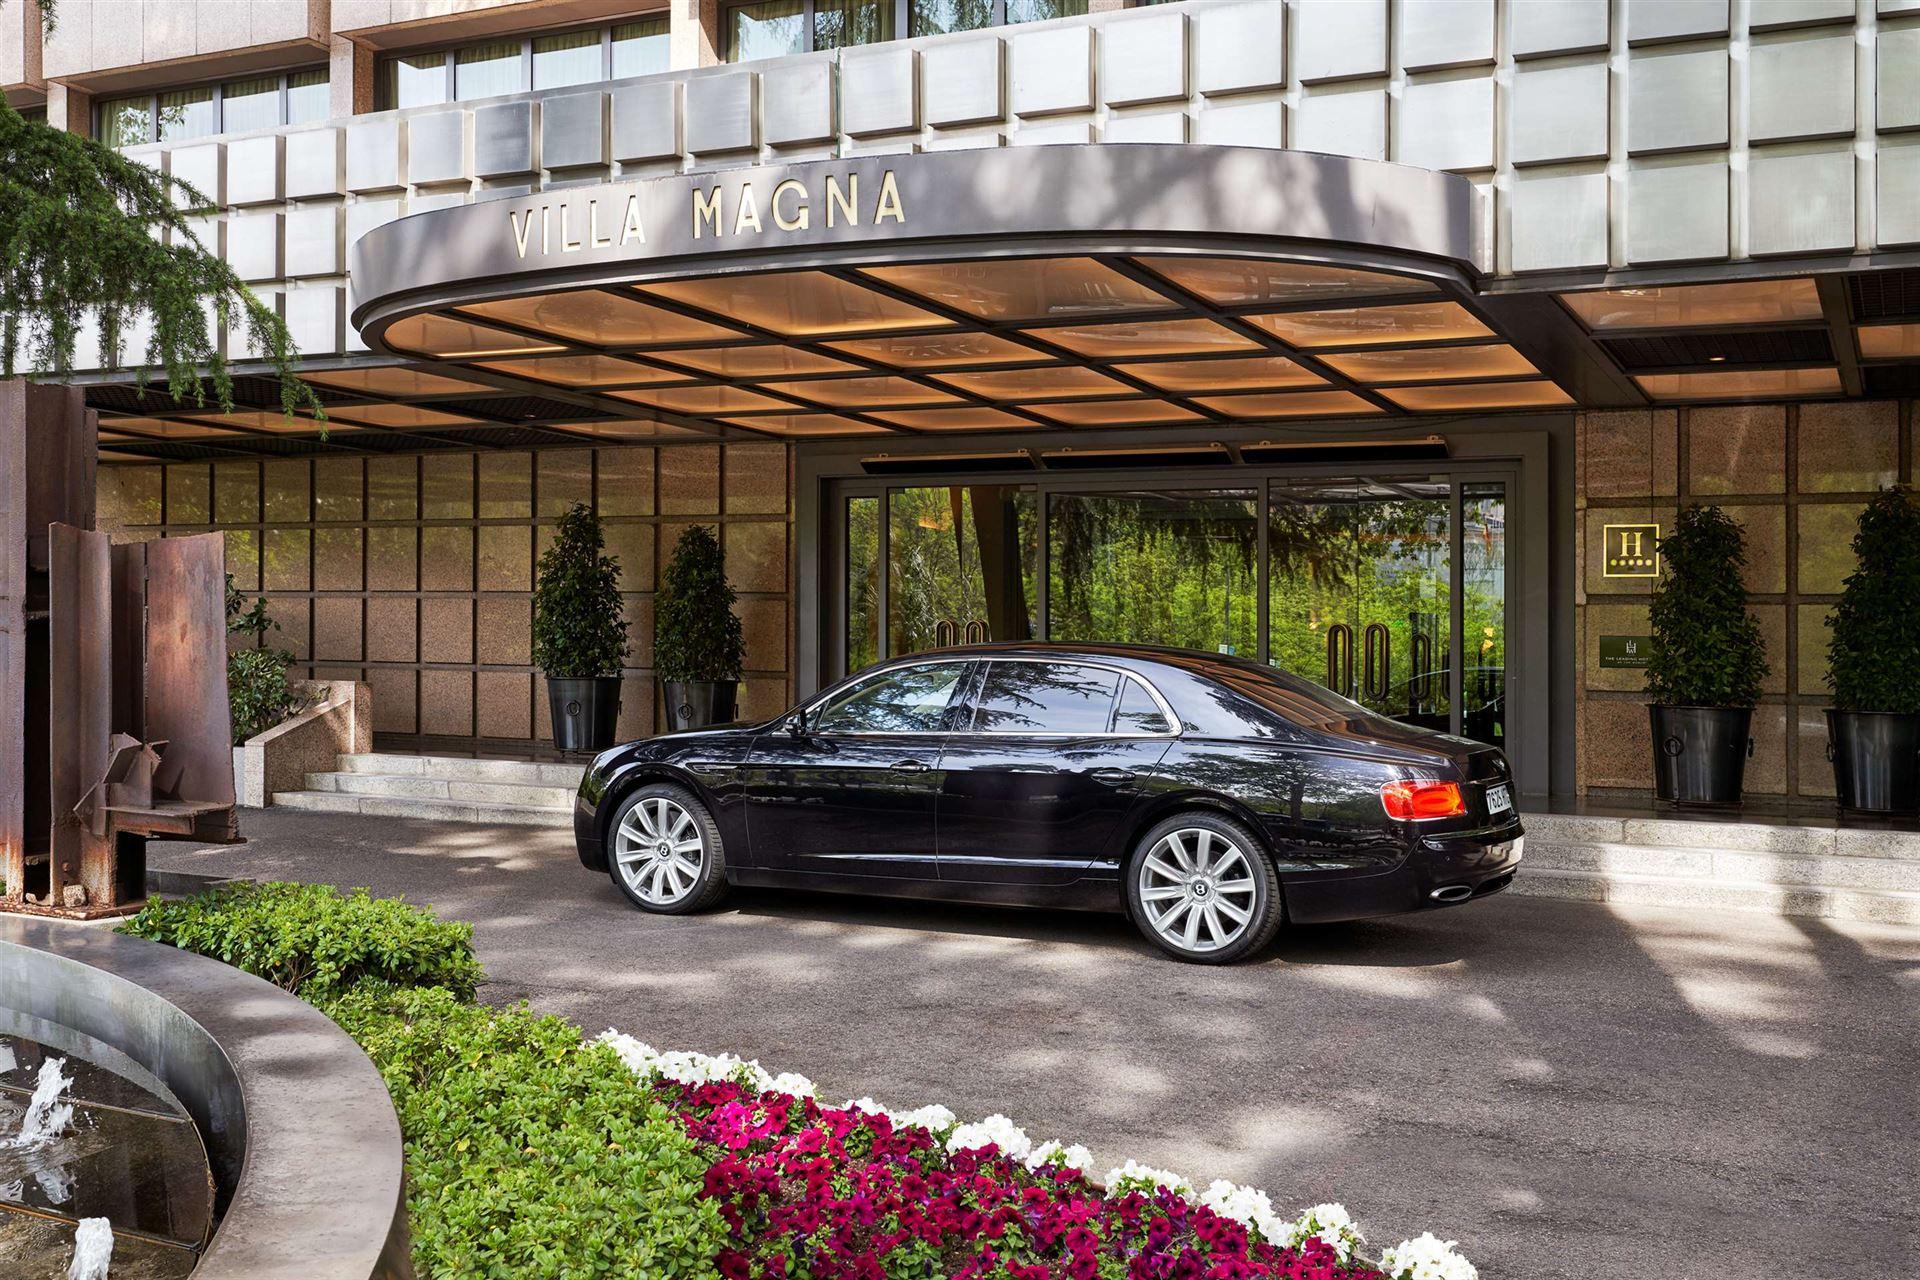 Villa Magna luxe hotel deals